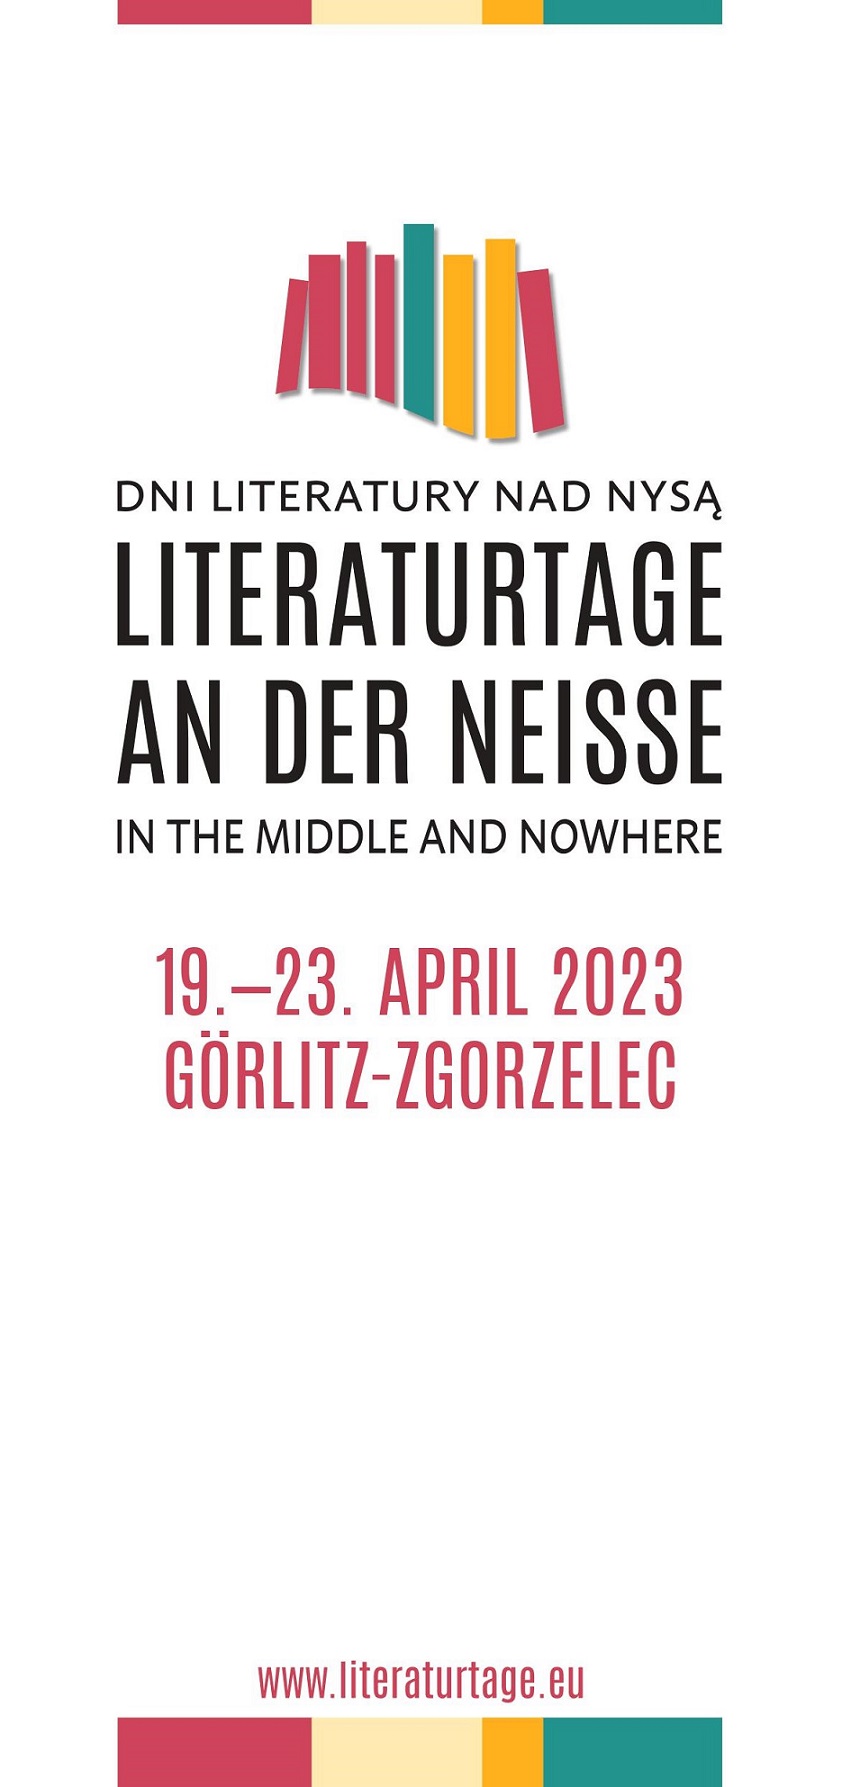 Grafika promująca Dni Literatury nad Nysą 2023. Grafika jest odnośnikiem do wpisu "Dni Literatury nad Nysą 19-23 kwietnia 2023 r.".